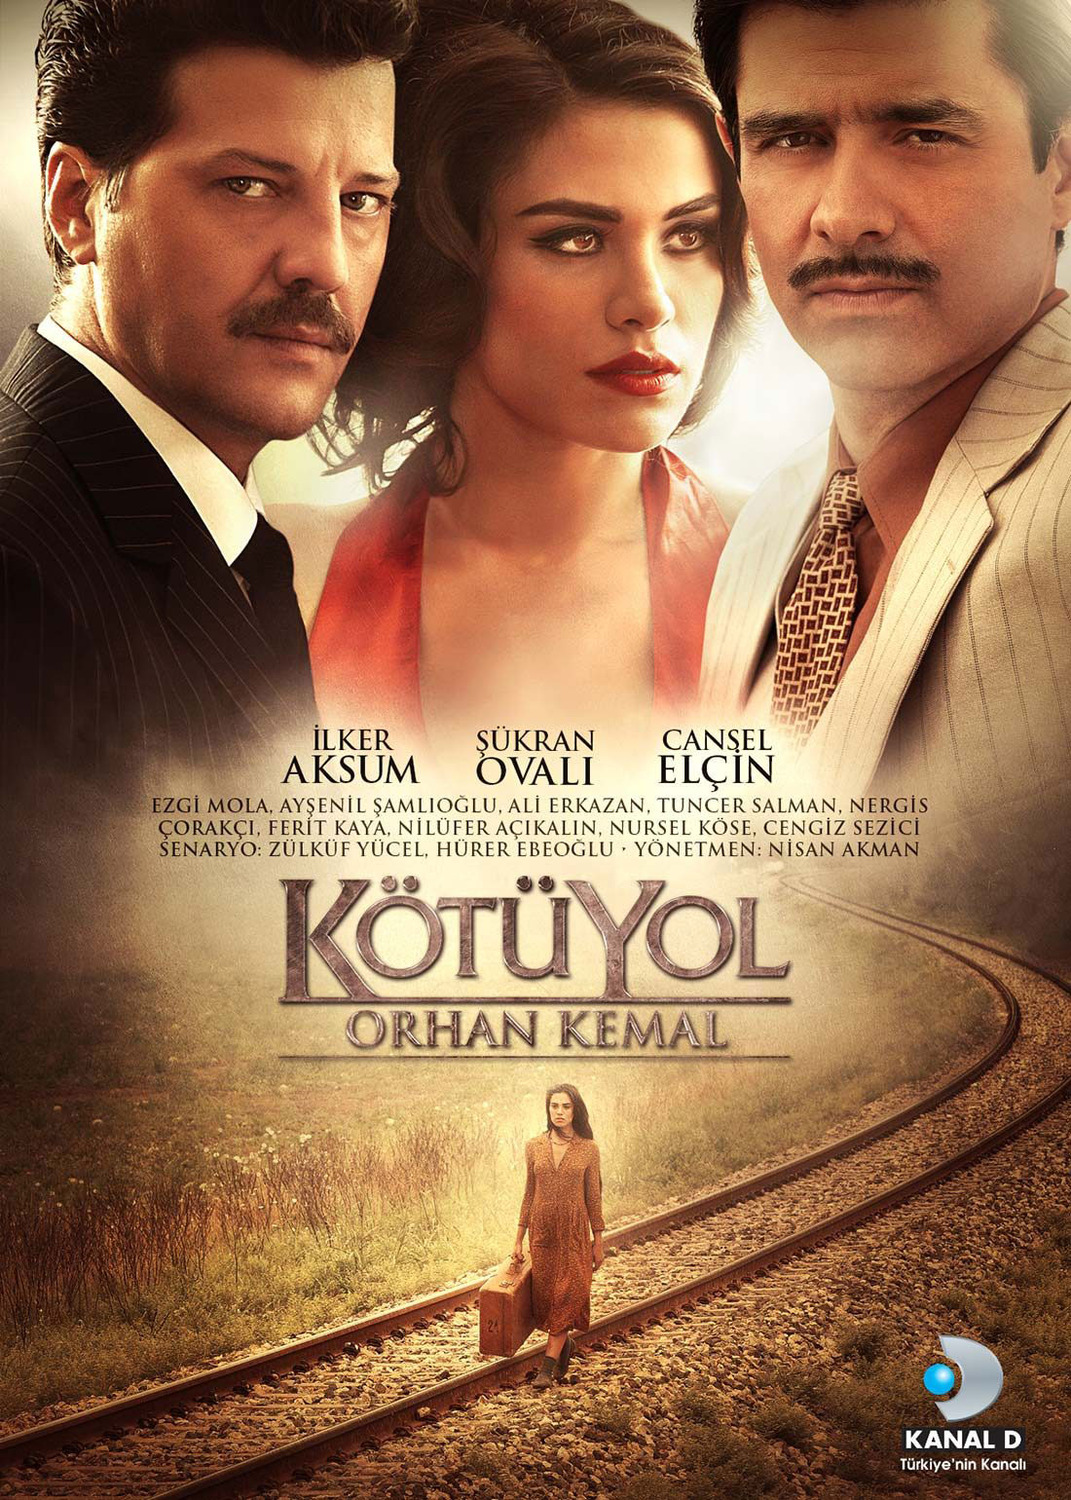 Extra Large TV Poster Image for Kötü Yol (#2 of 2)